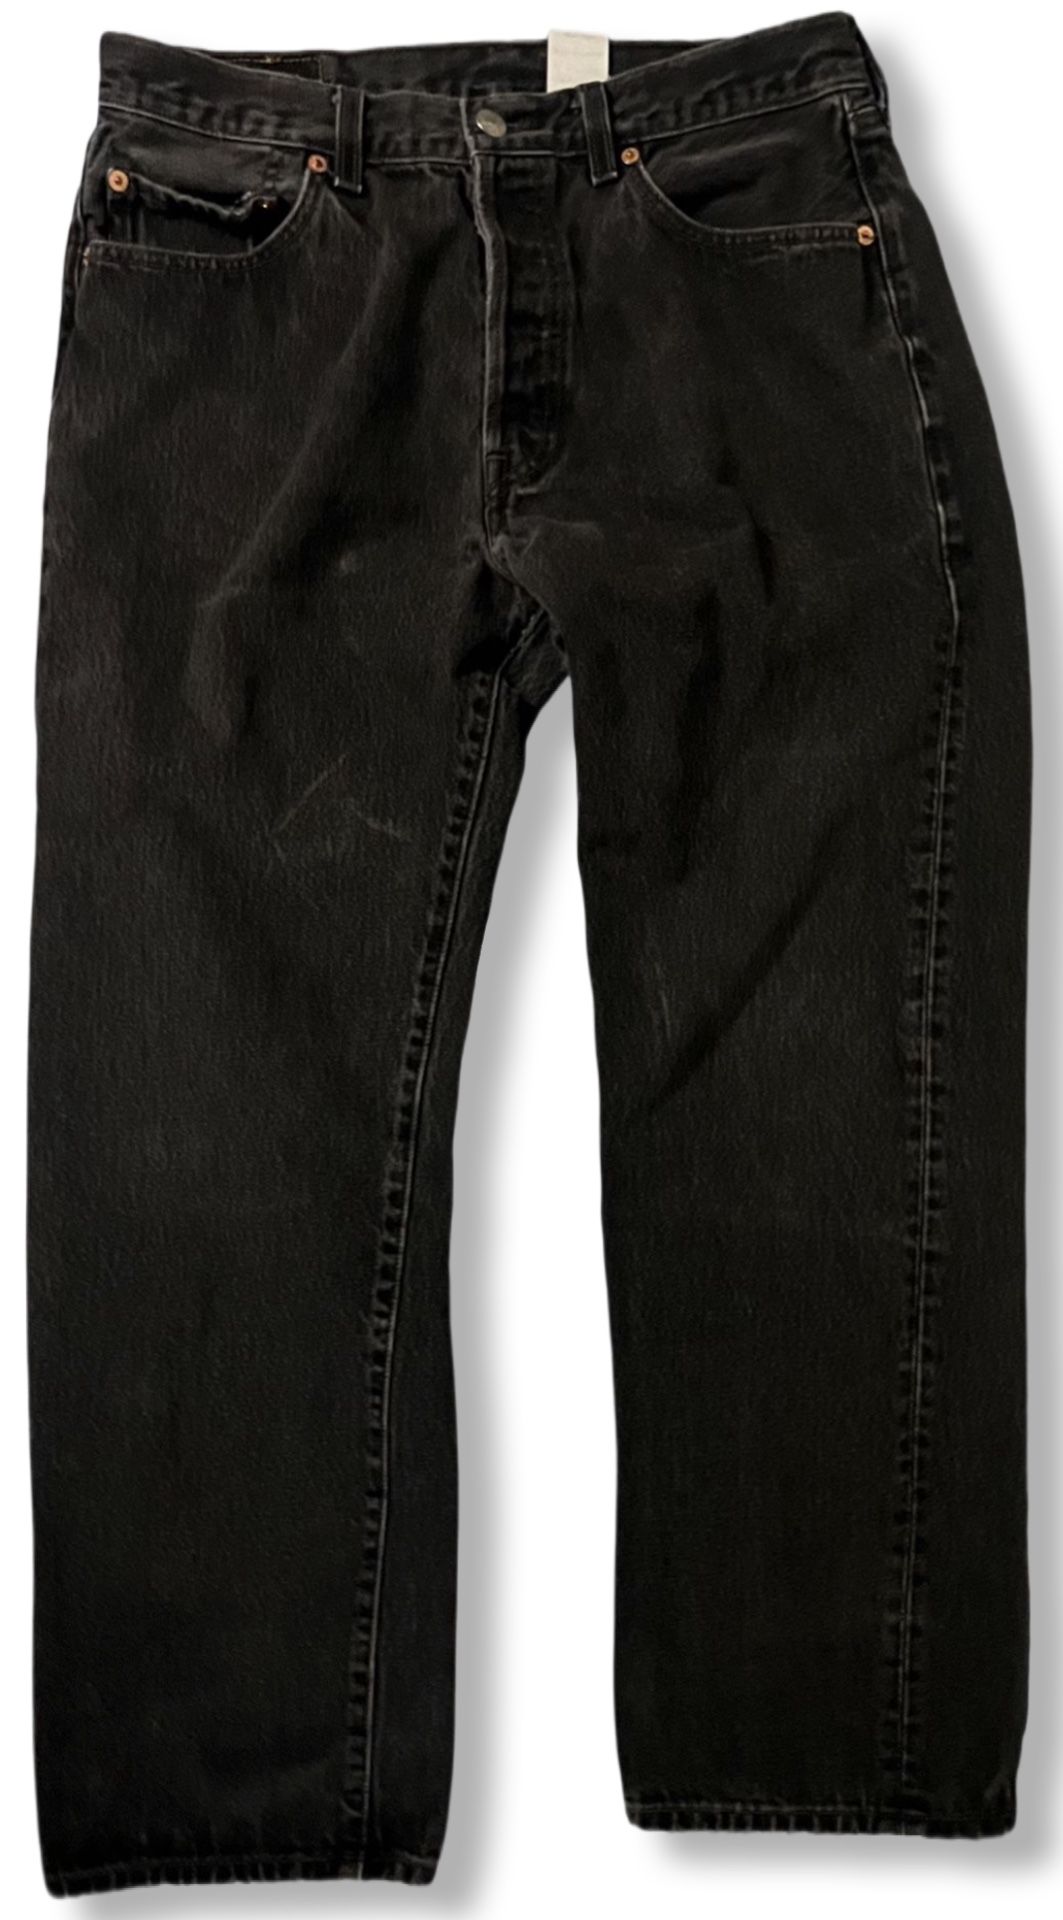 Levis 501 Men Jeans 34x30 for Sale in Henderson, NV - OfferUp